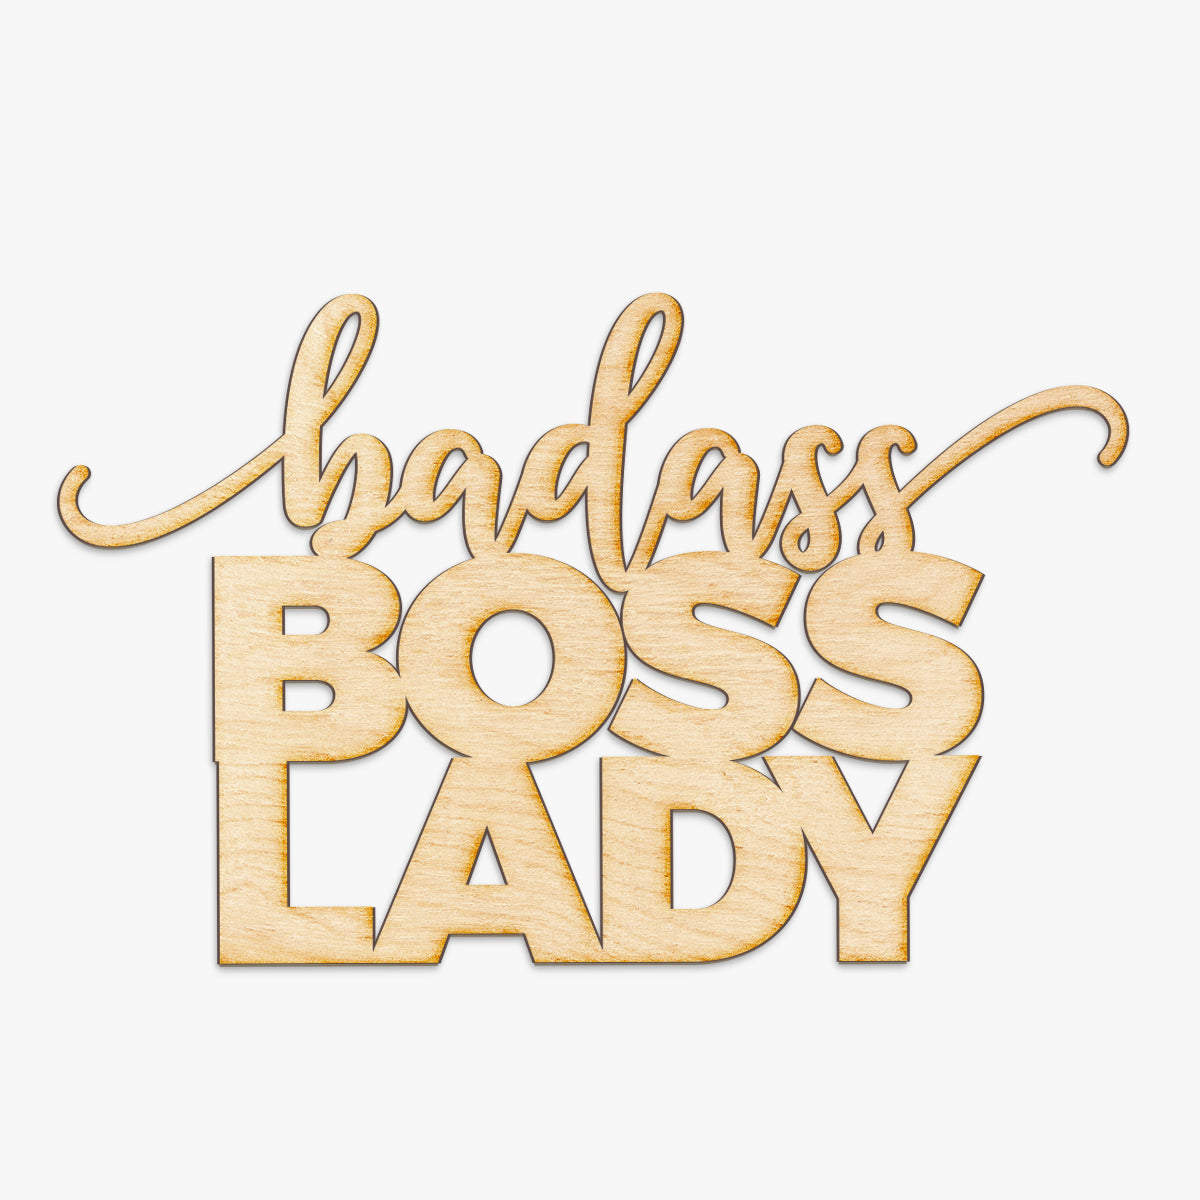 Badass Boss Lady Wood Cut